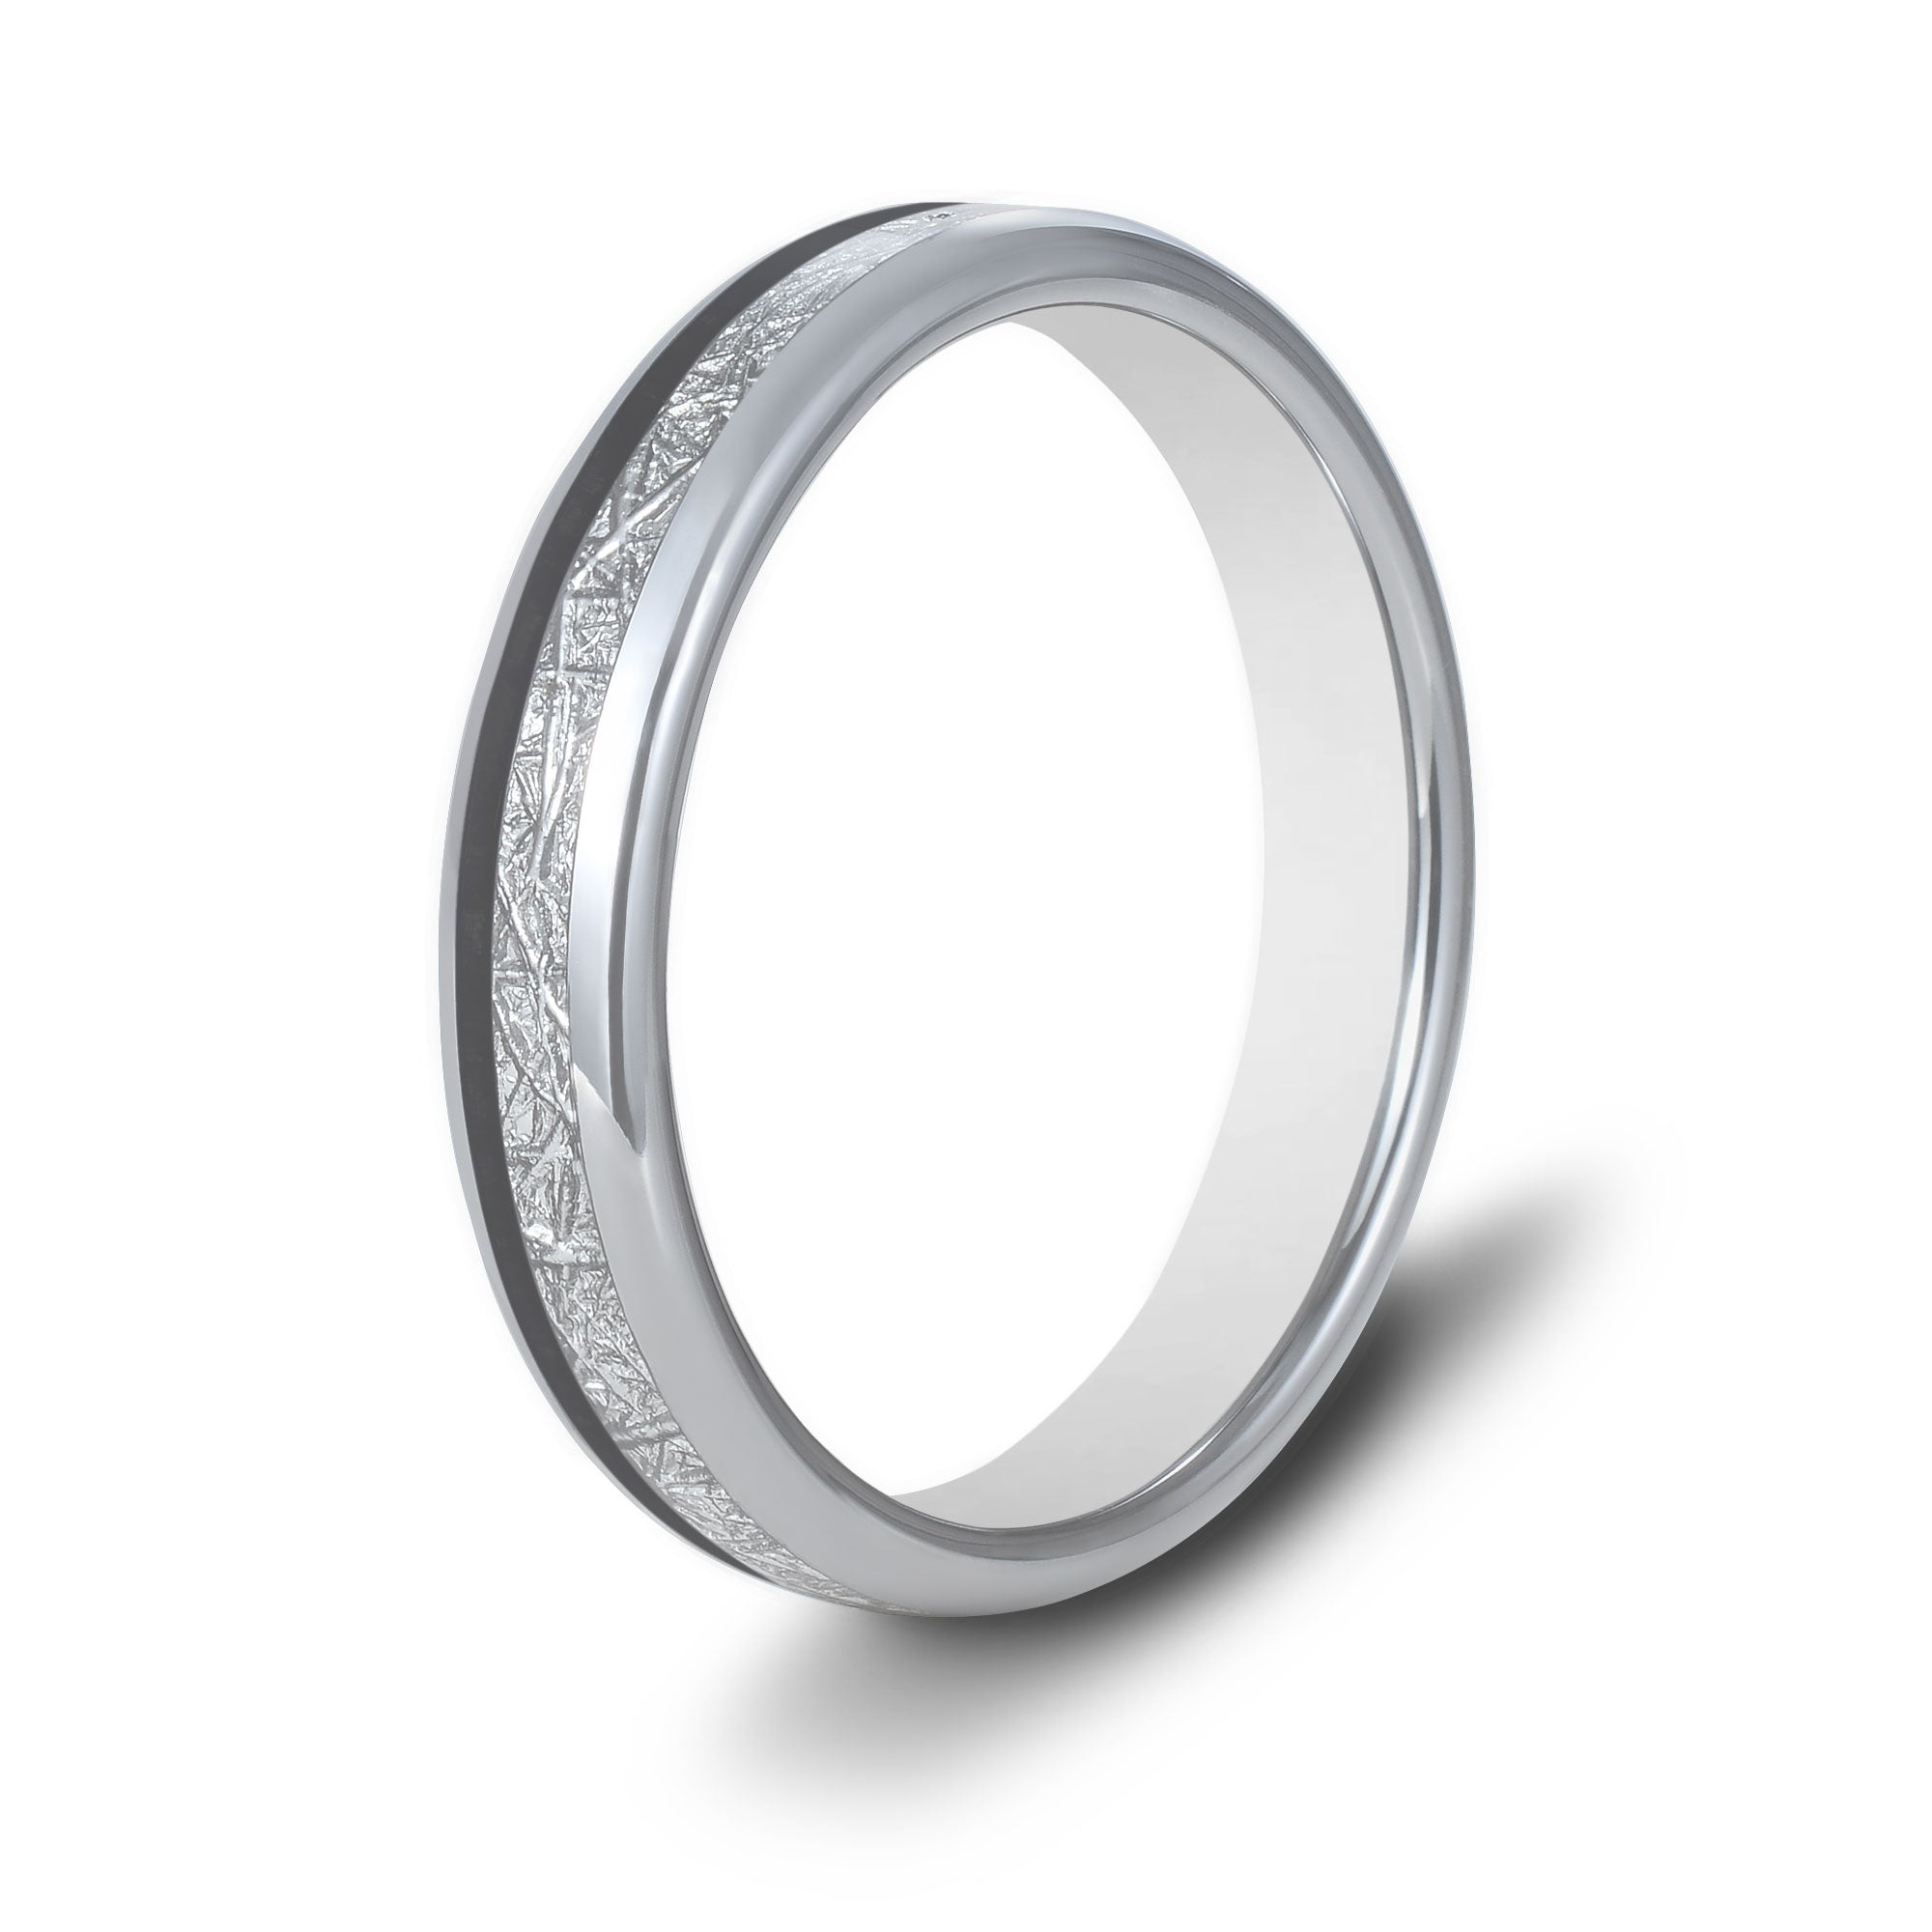 The Eternal - Silver 4mm Meteorite Tungsten Ring